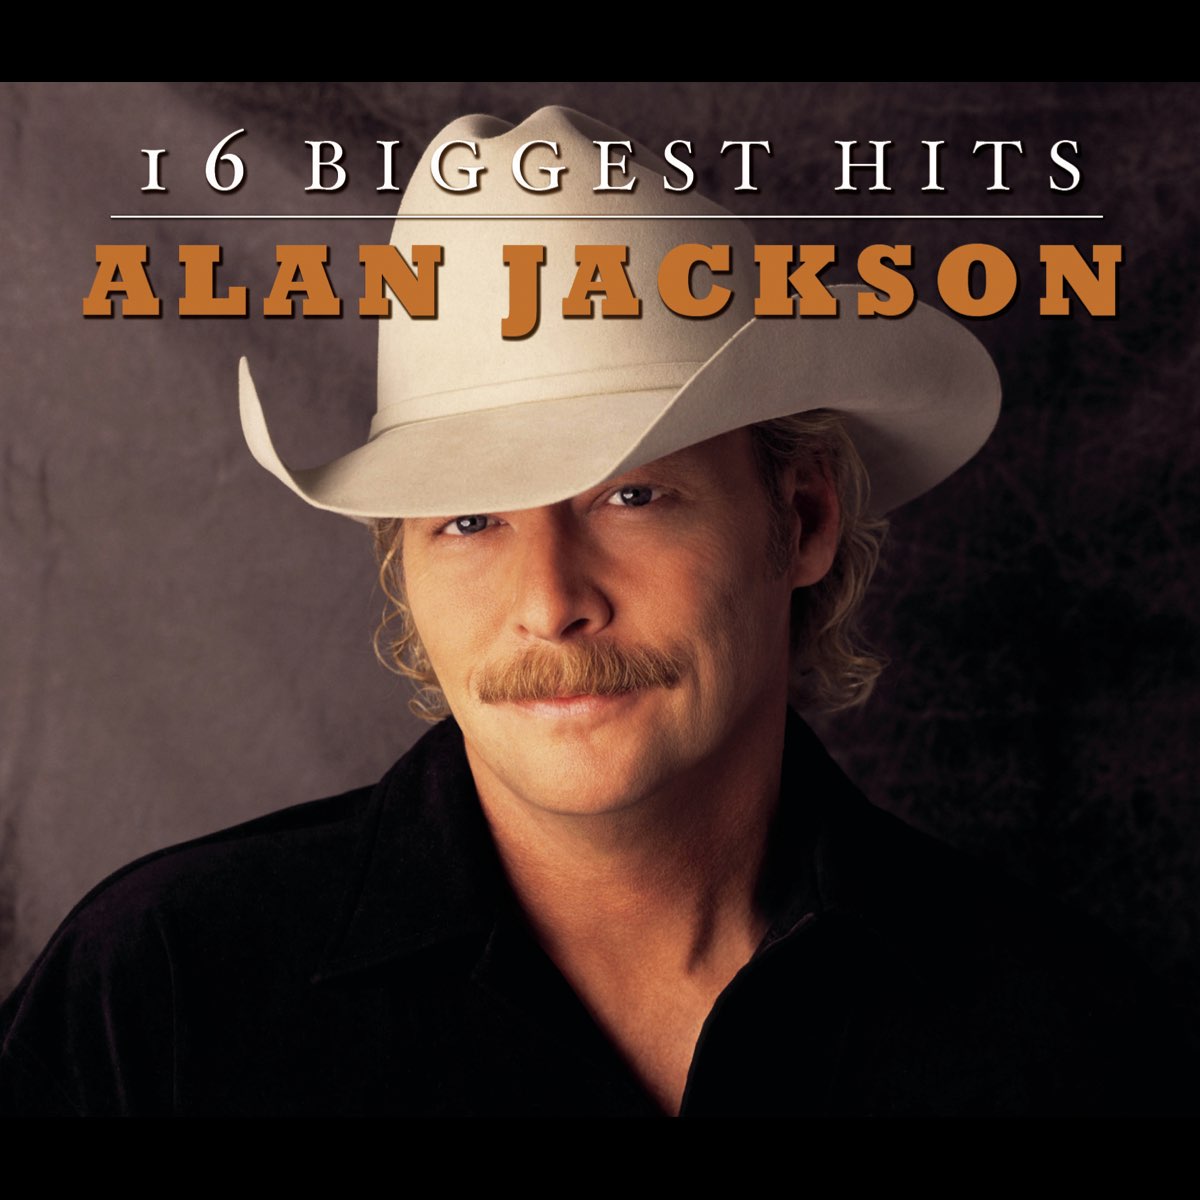 Alan Jackson: albums, songs, playlists